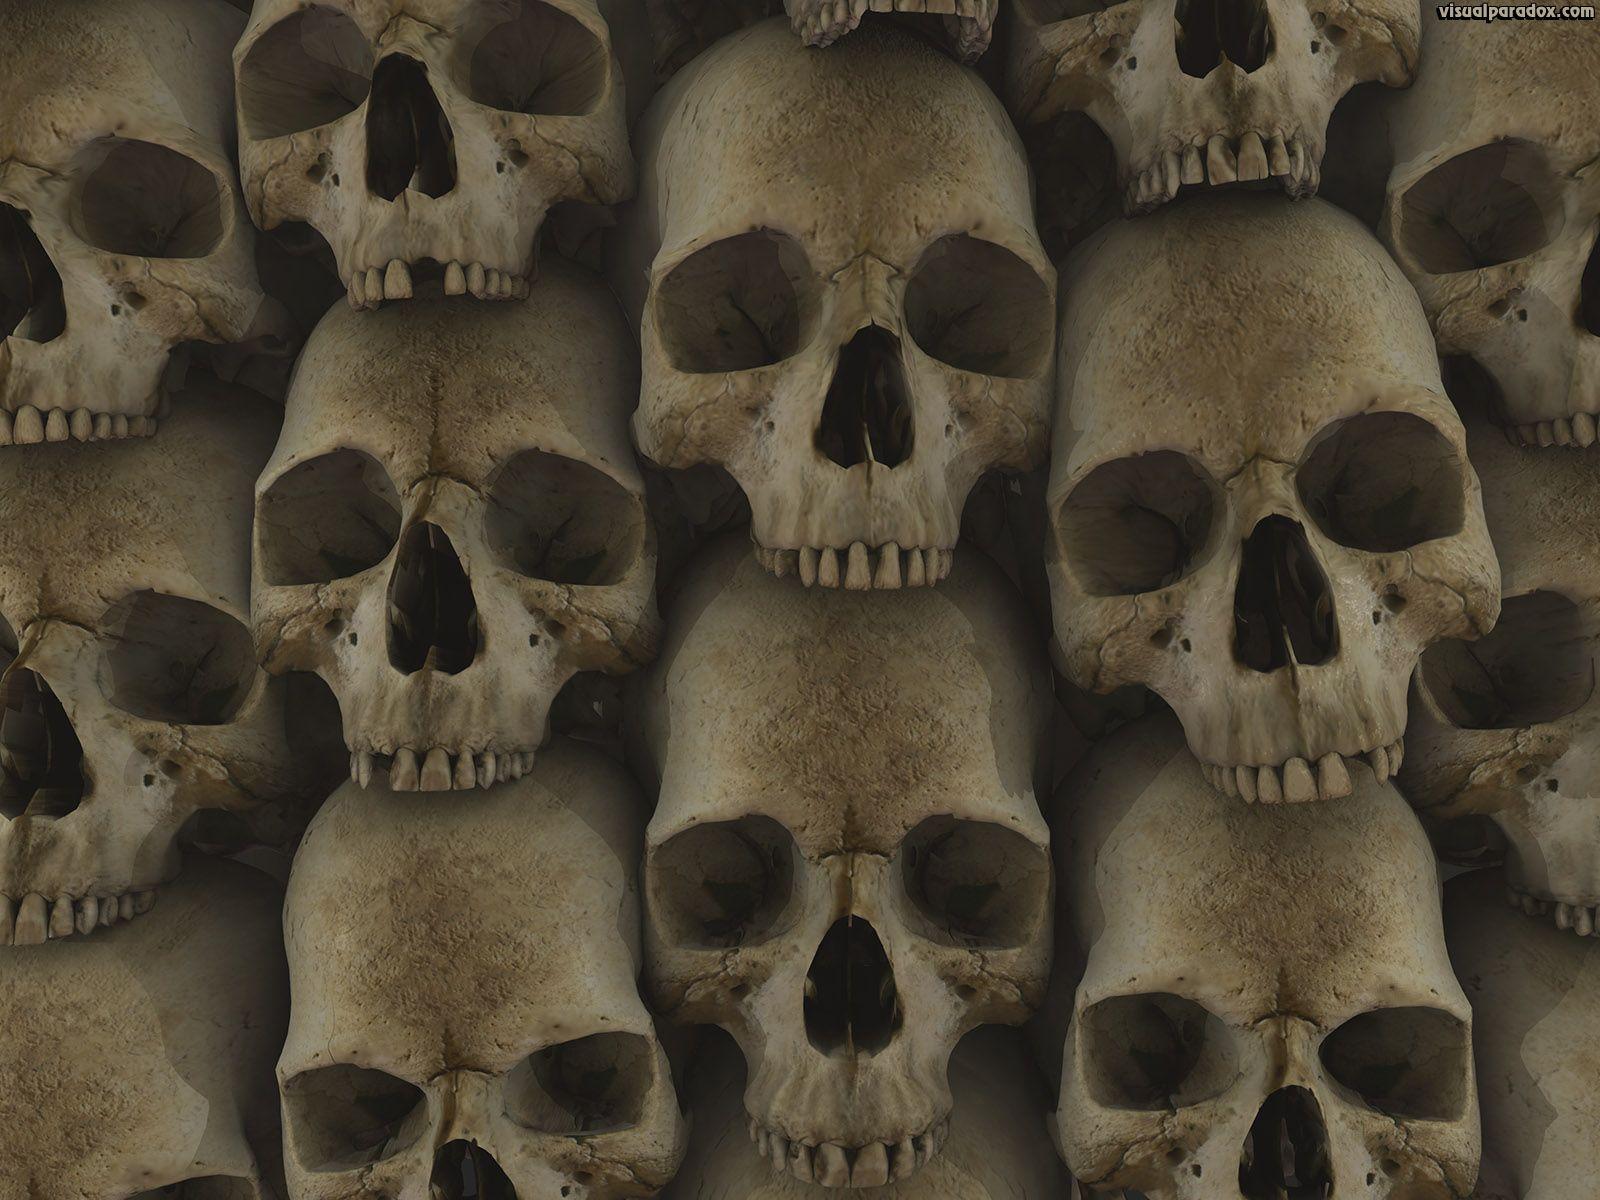 Free 3D Skull Wallpapers - Wallpaper Cave
 3d Skull Wallpaper Hd